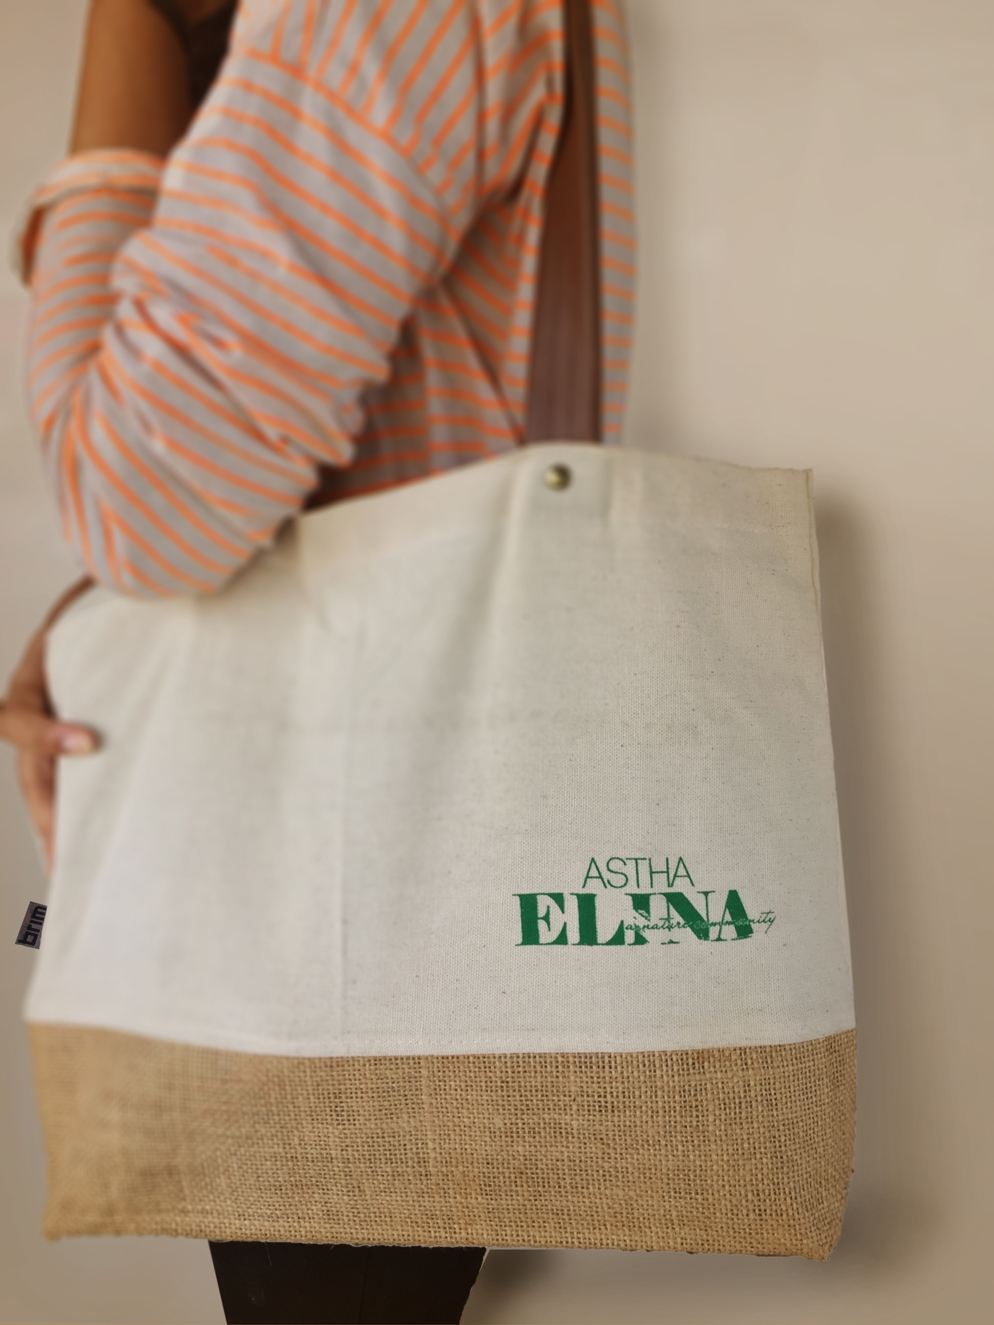 Astha Elina bag design